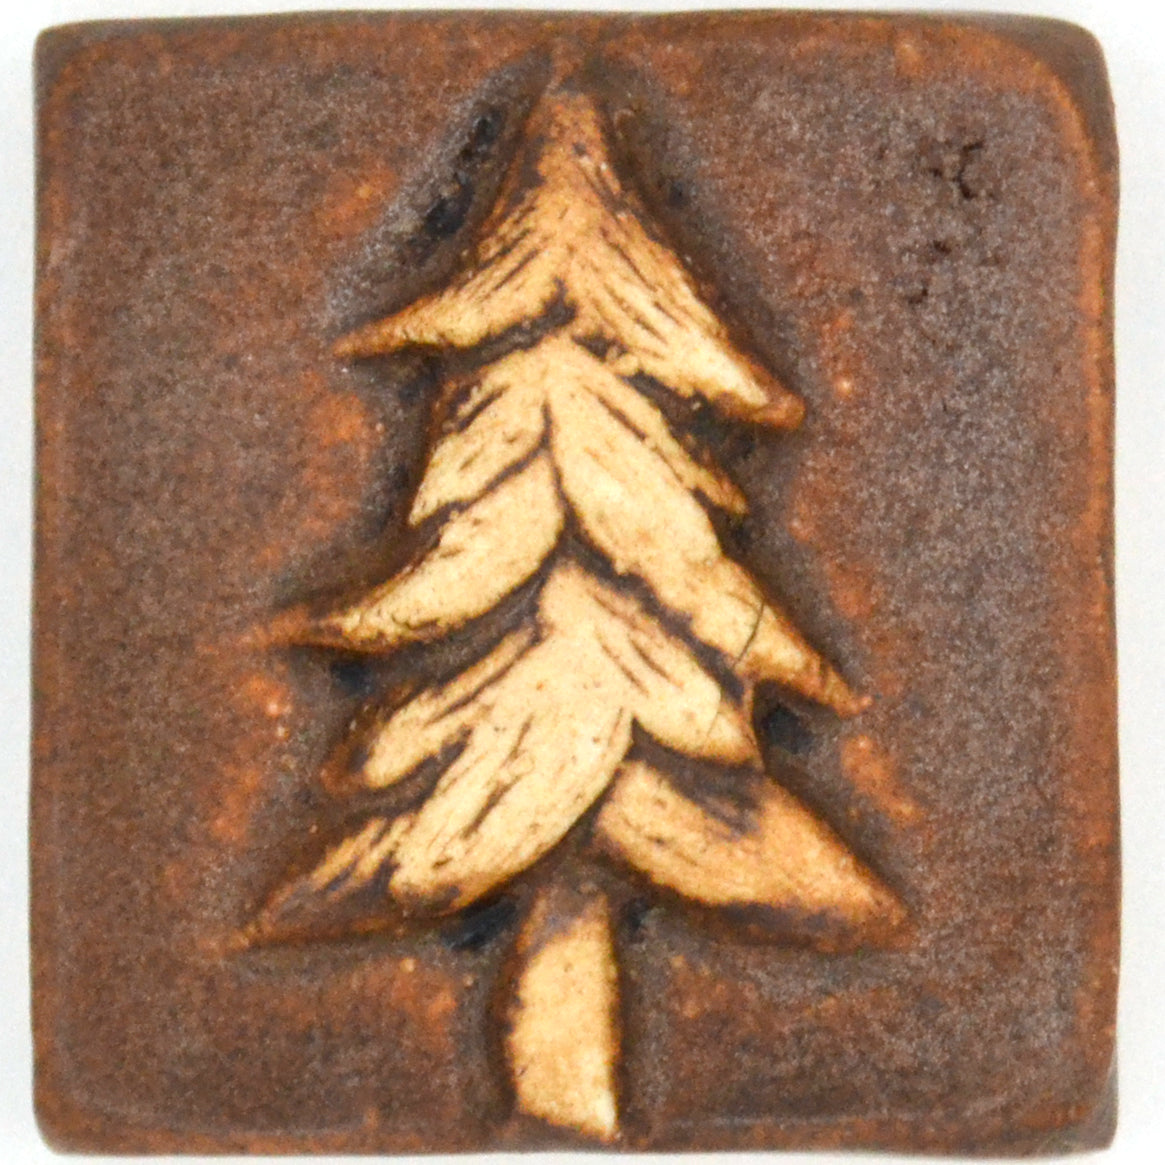 2x2 pine tree tile